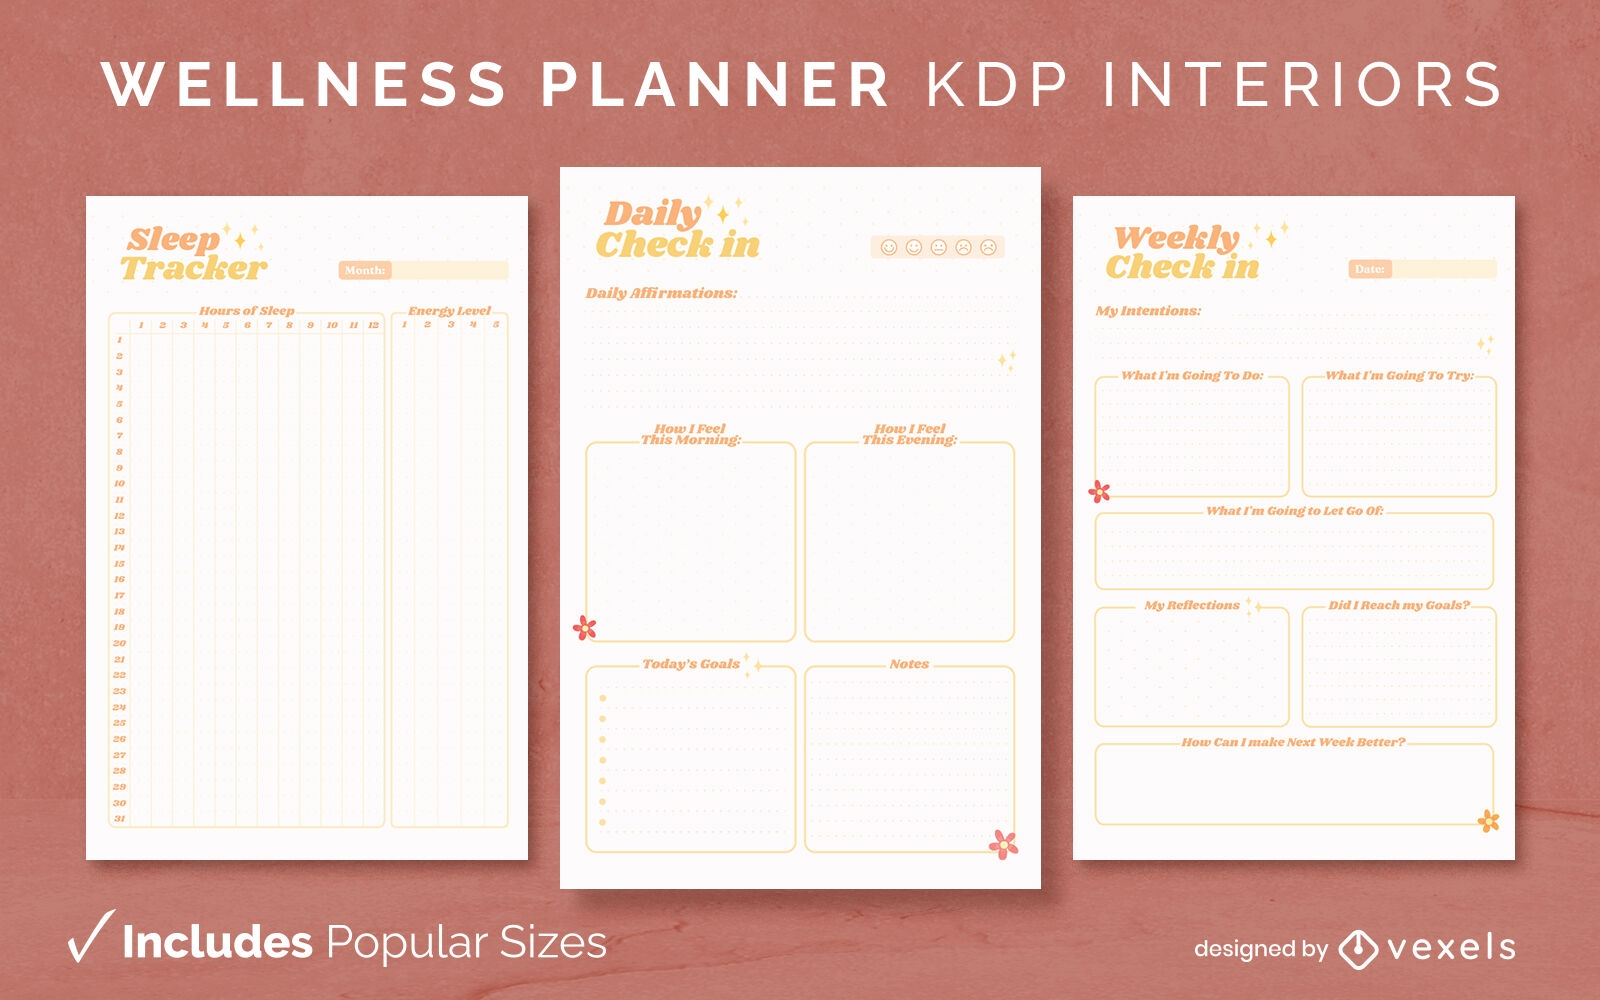 Retro wellness planner design template KDP